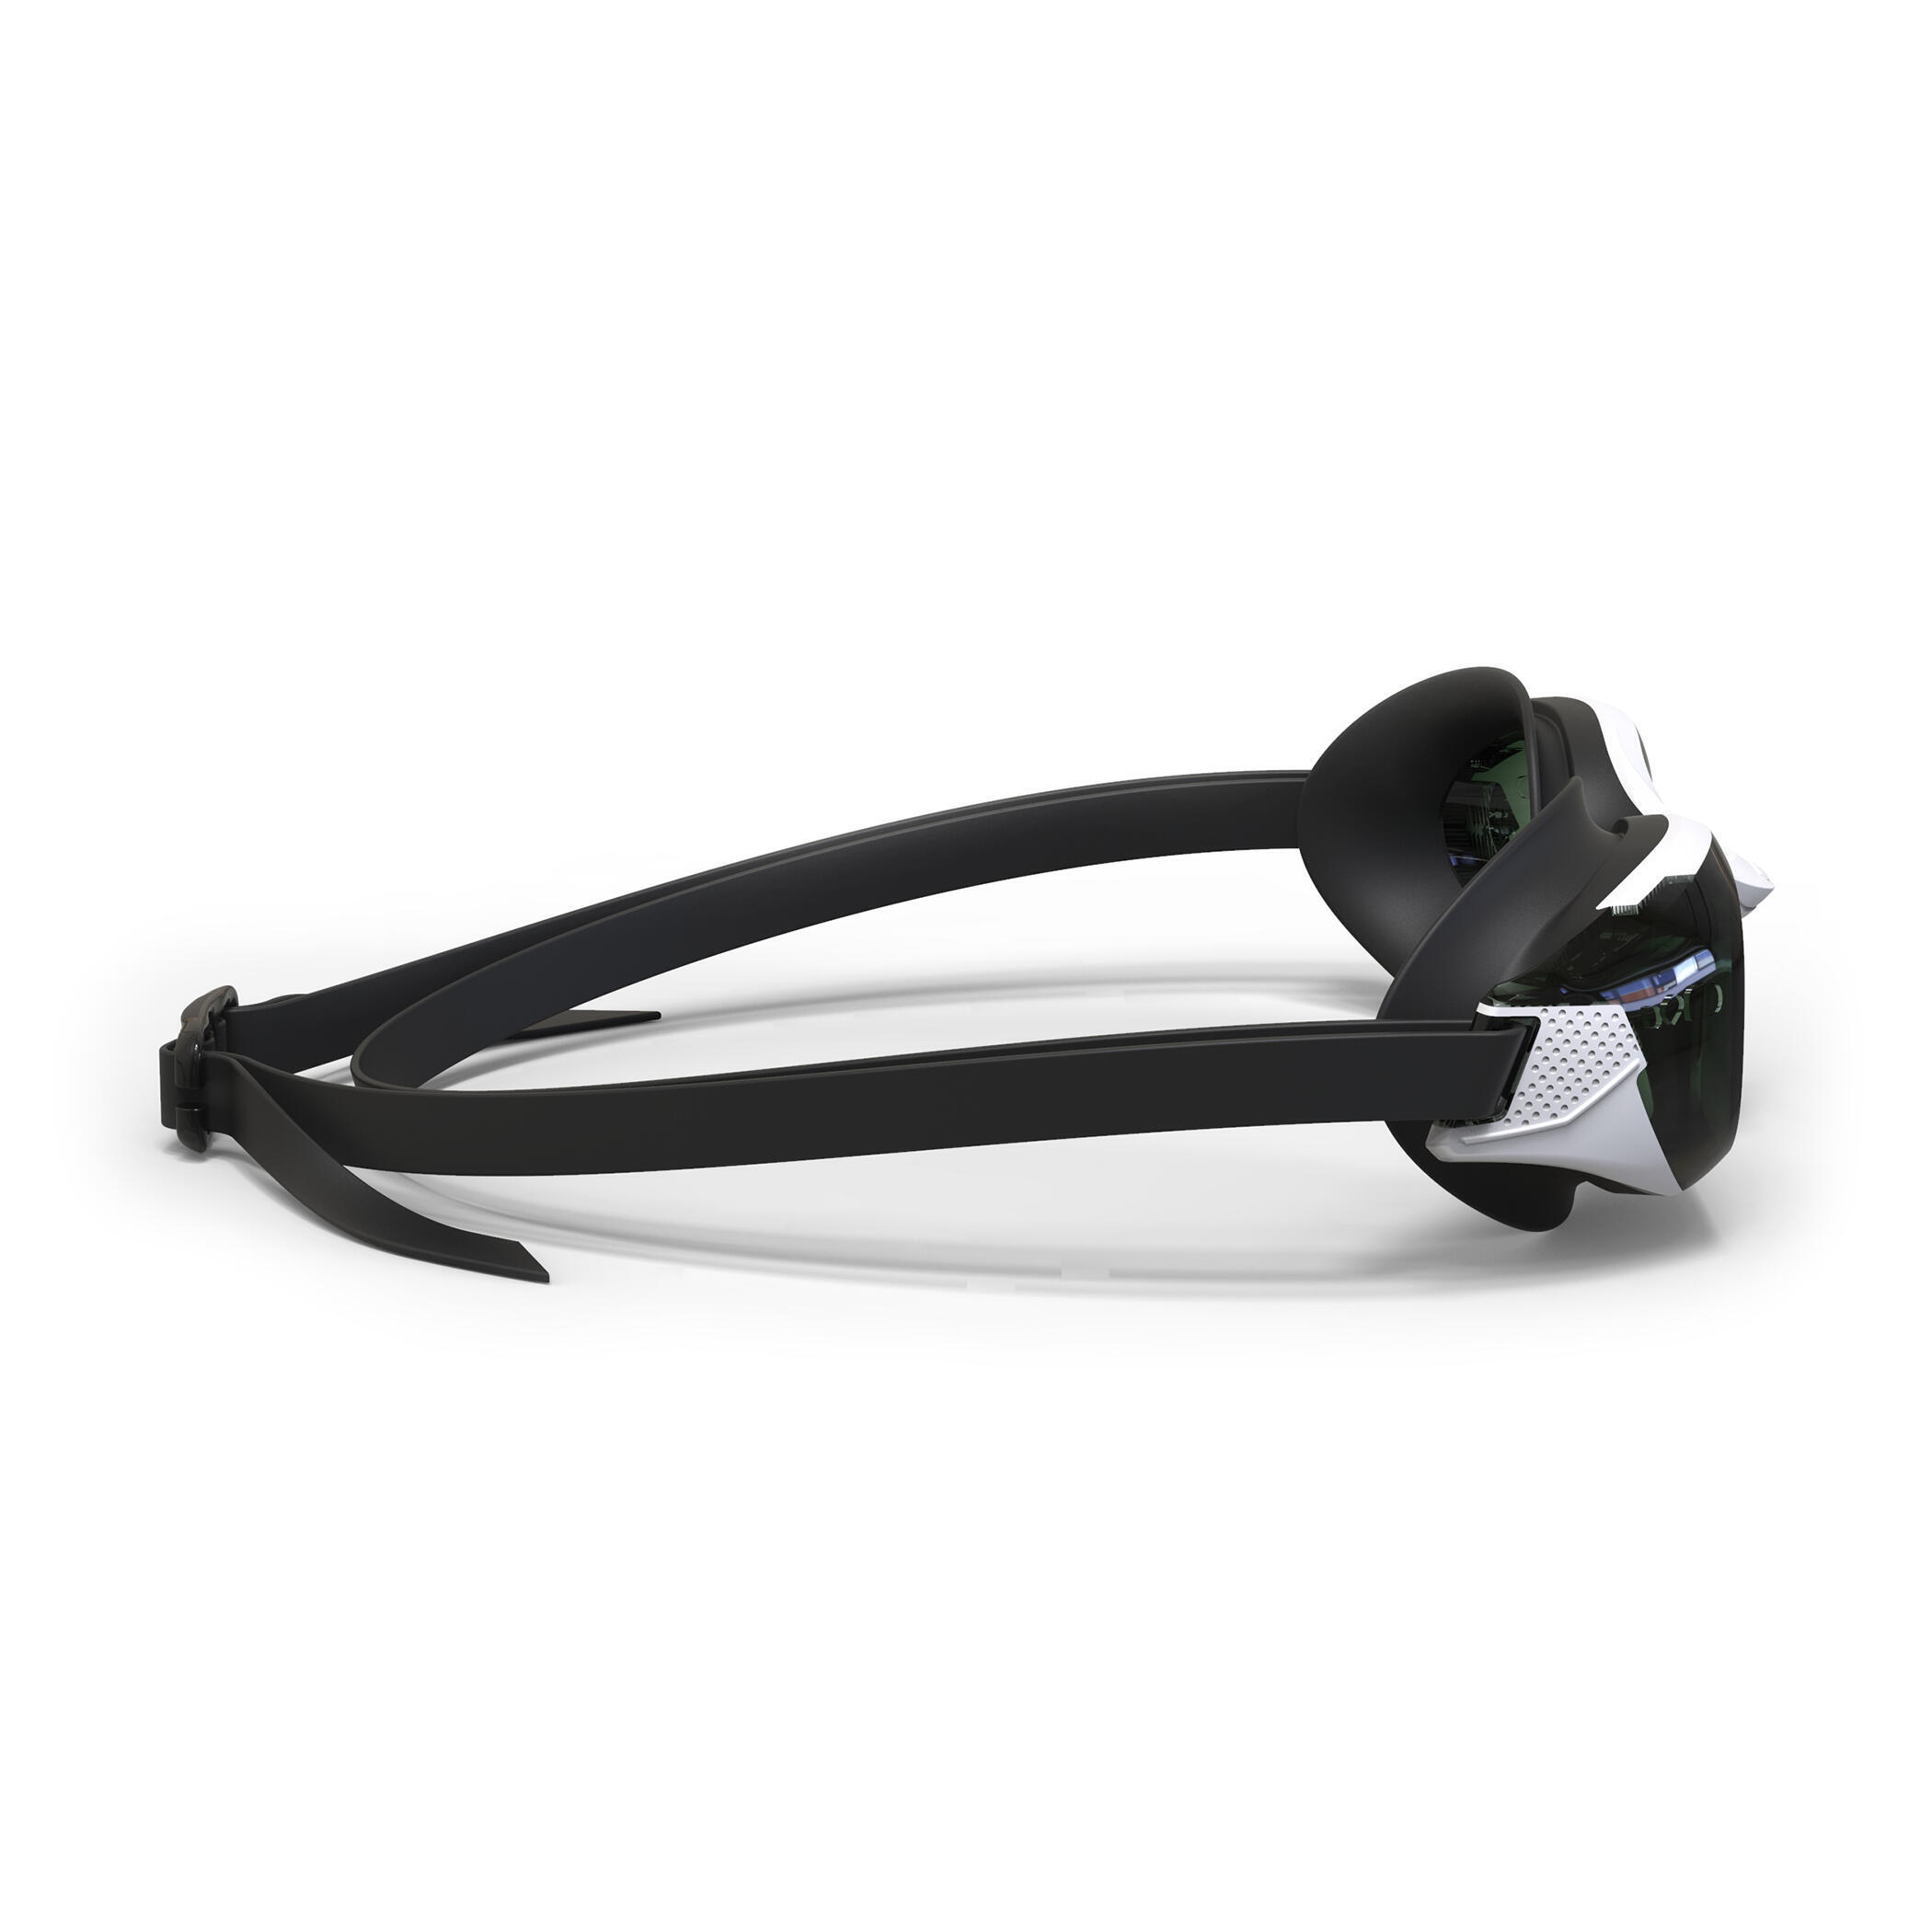 BFIT corrective swimming goggles - Smoked lenses - Single size - Black 3/6